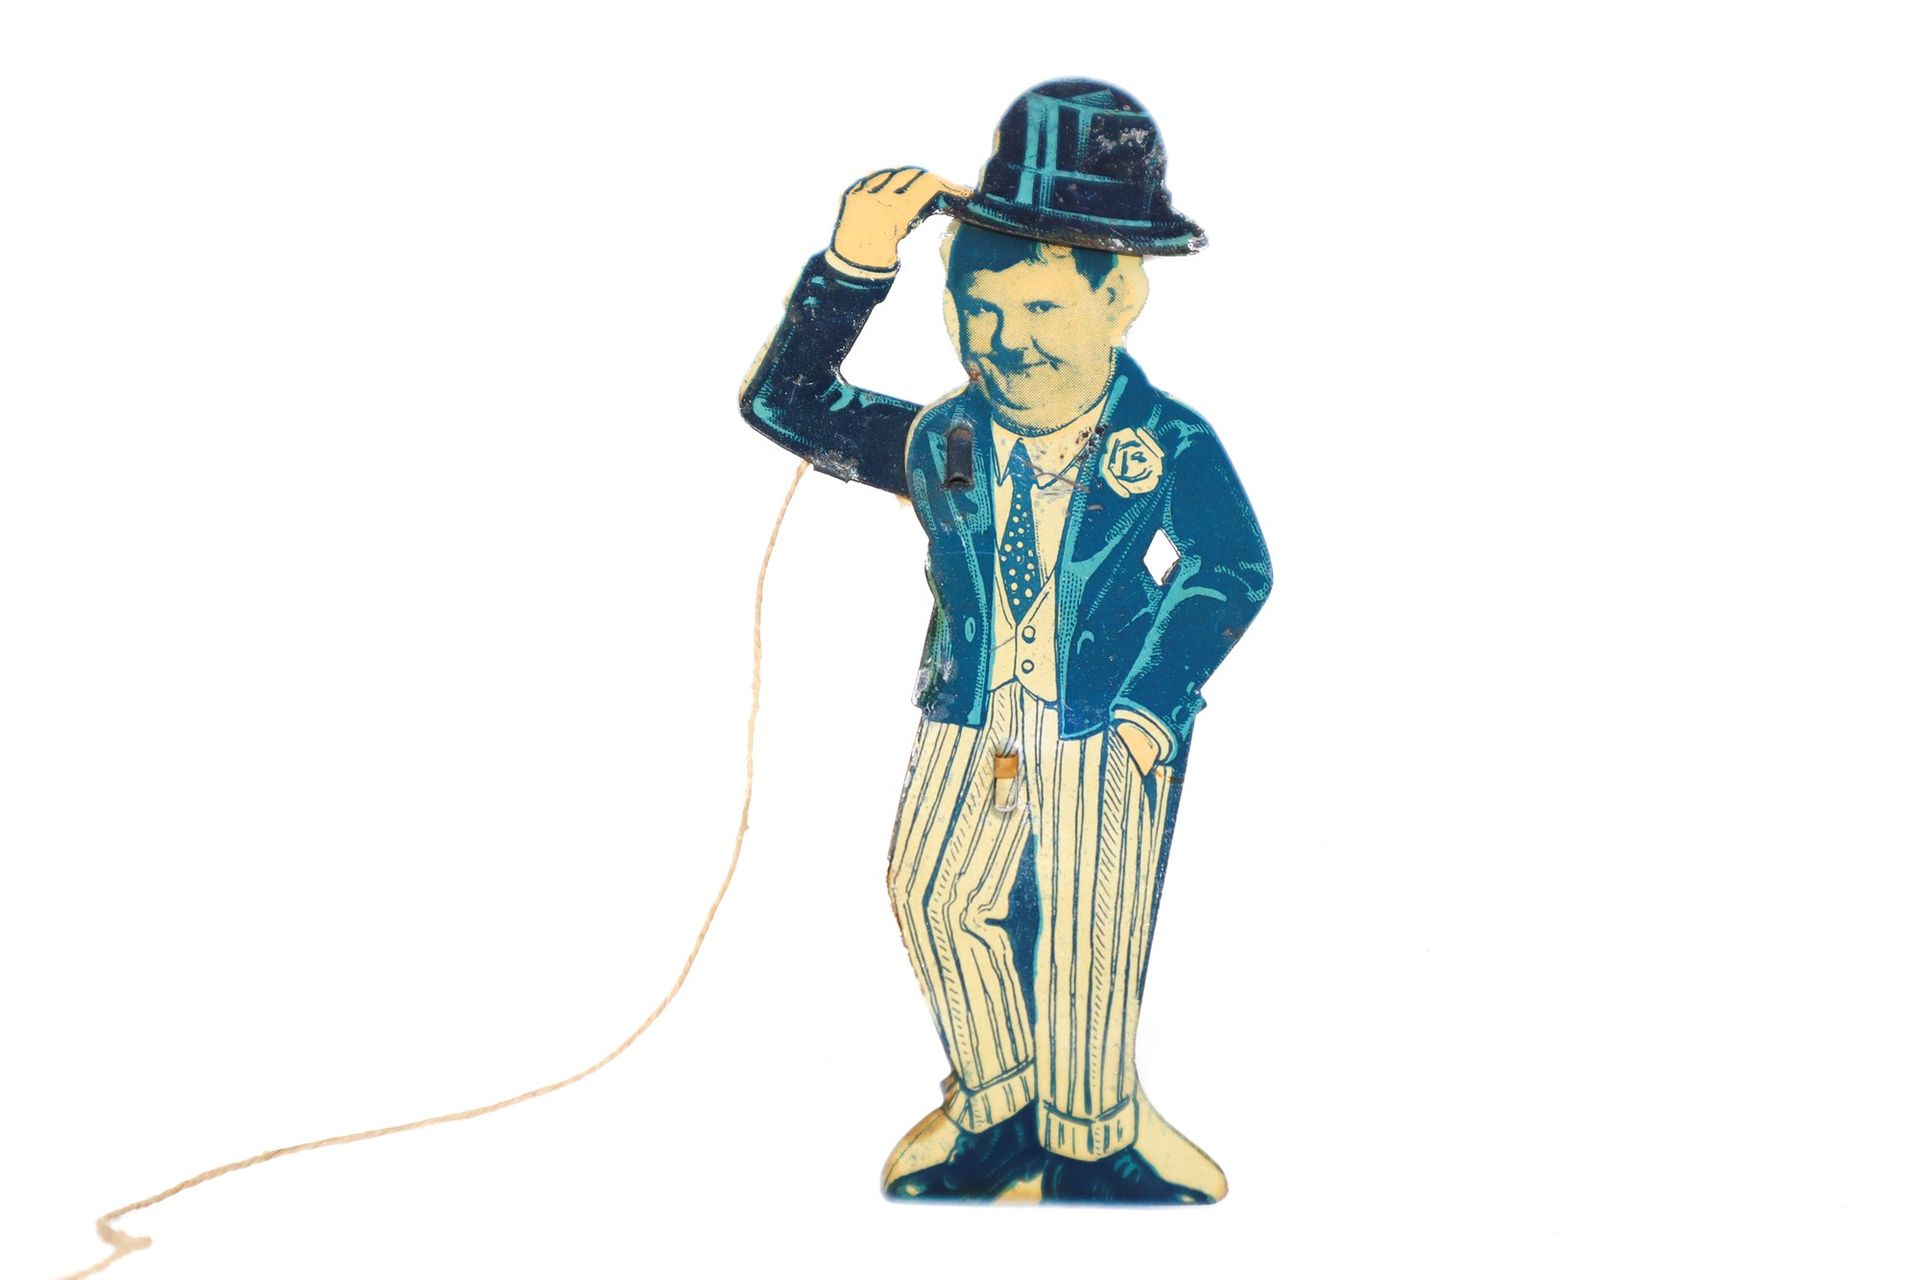 Null 奥利弗-哈迪（Oliver Hardy），1920年代，高11厘米，有钢丝和弹性装置来移动帽子，使用痕迹正常。